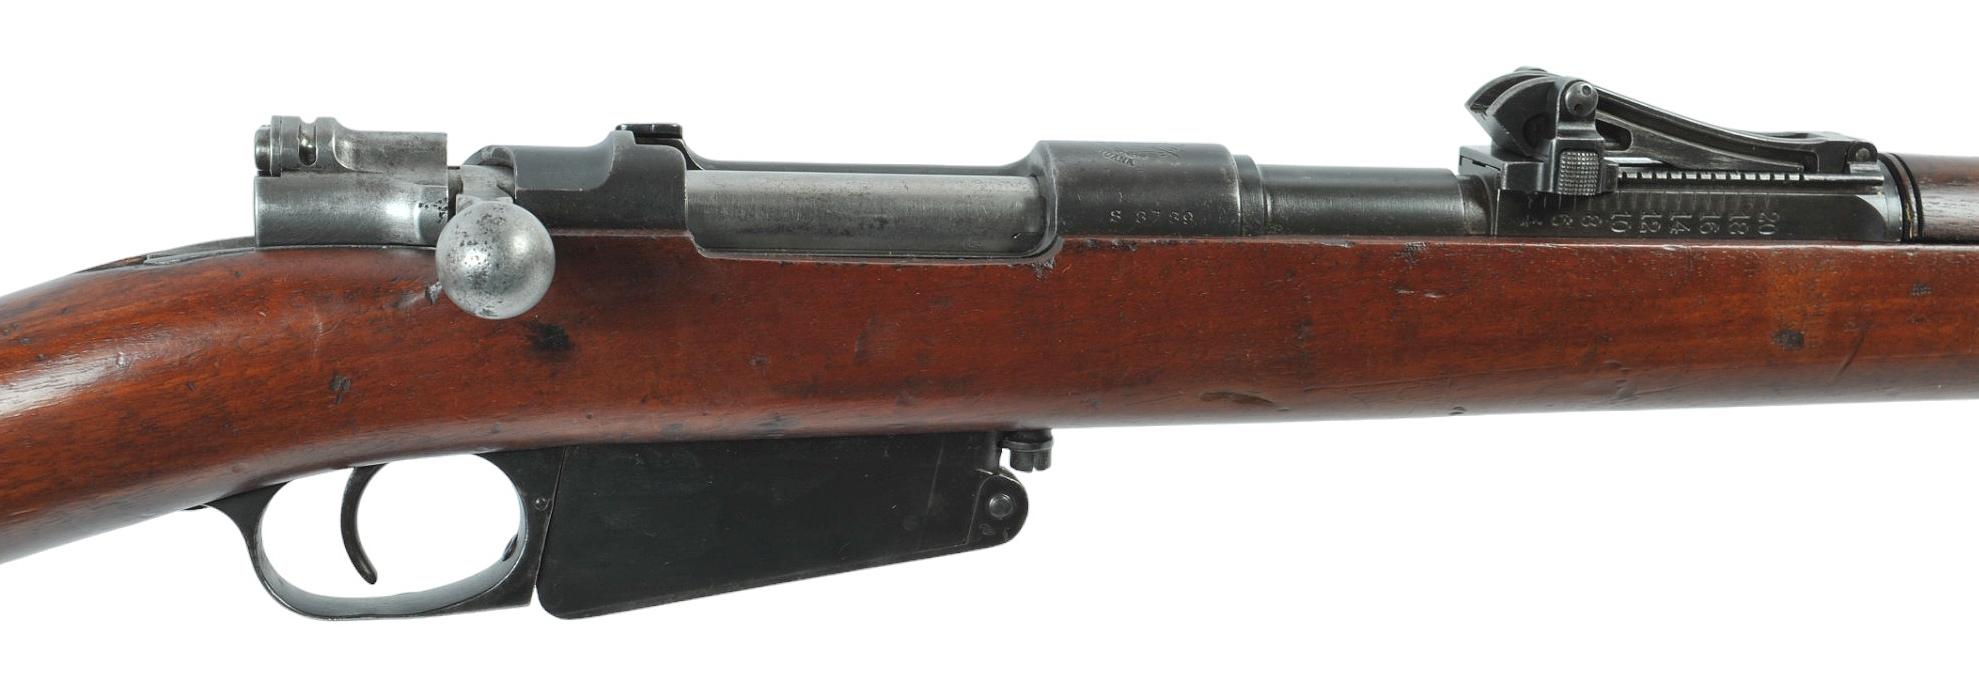 RARE Peruvian Mauser Model 1891 7.65x53mm Bolt-Action Rifle - No FFL Required (VDM1)